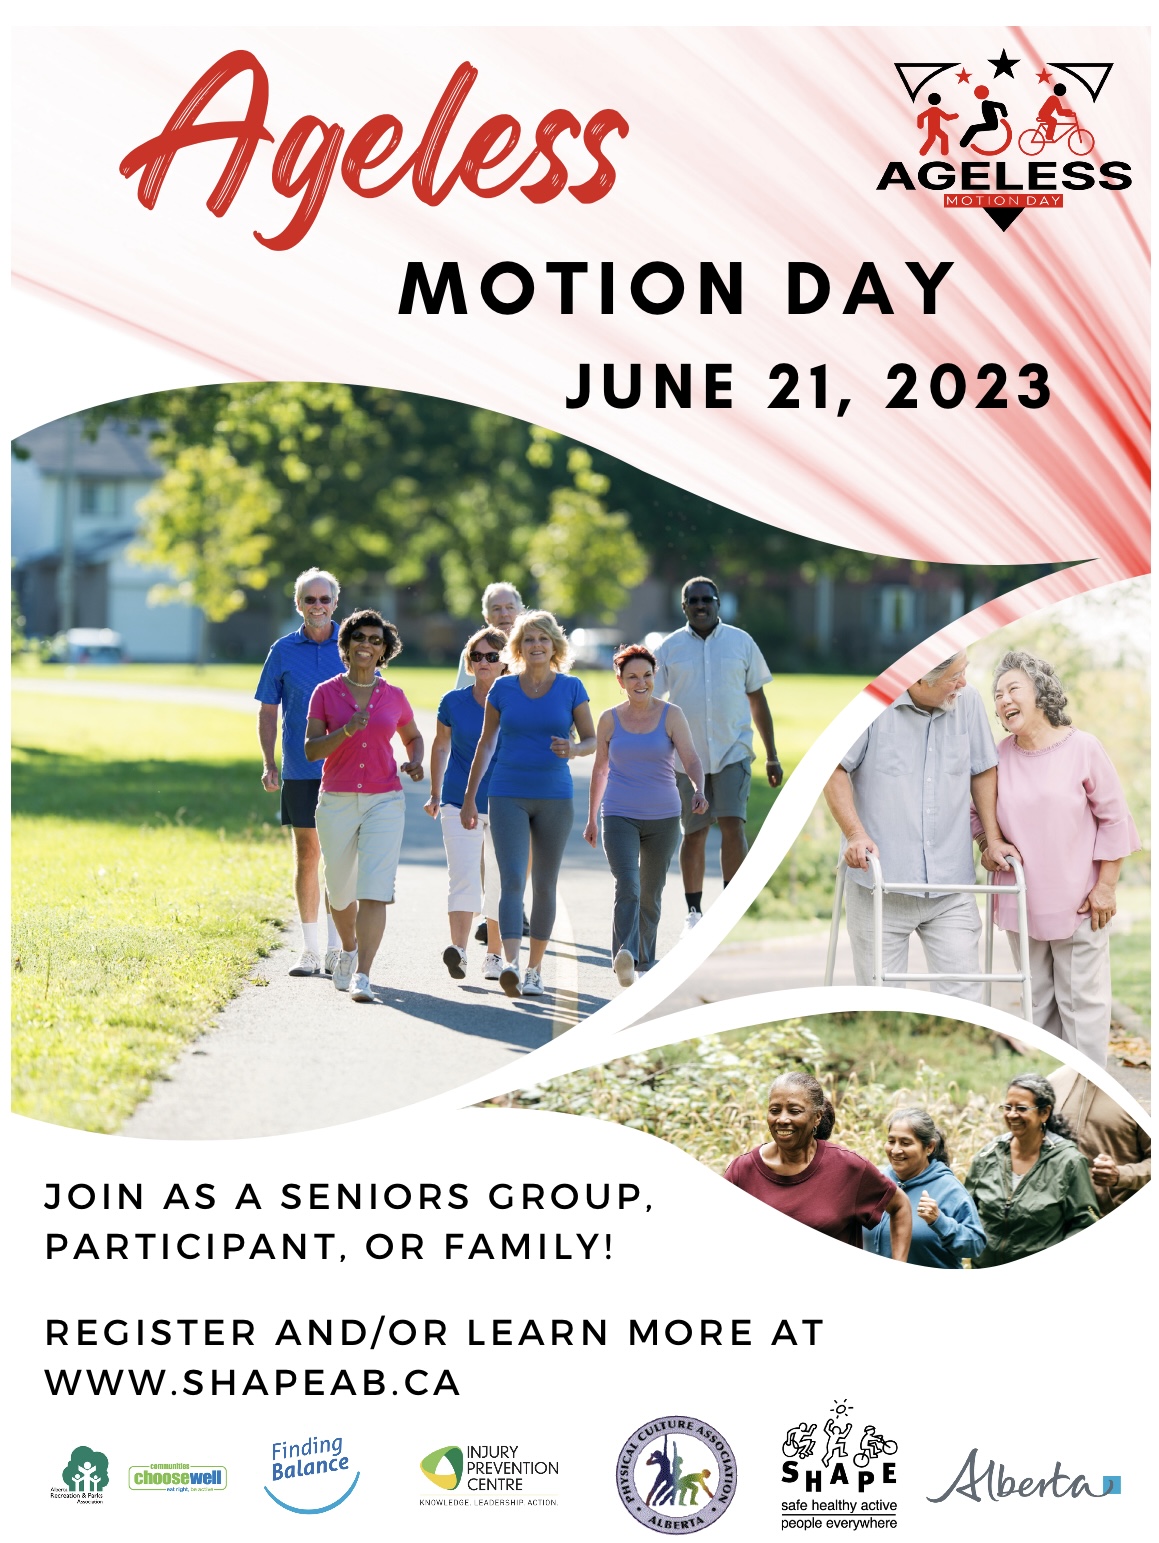 Ageless Motion Day June 21, 2023